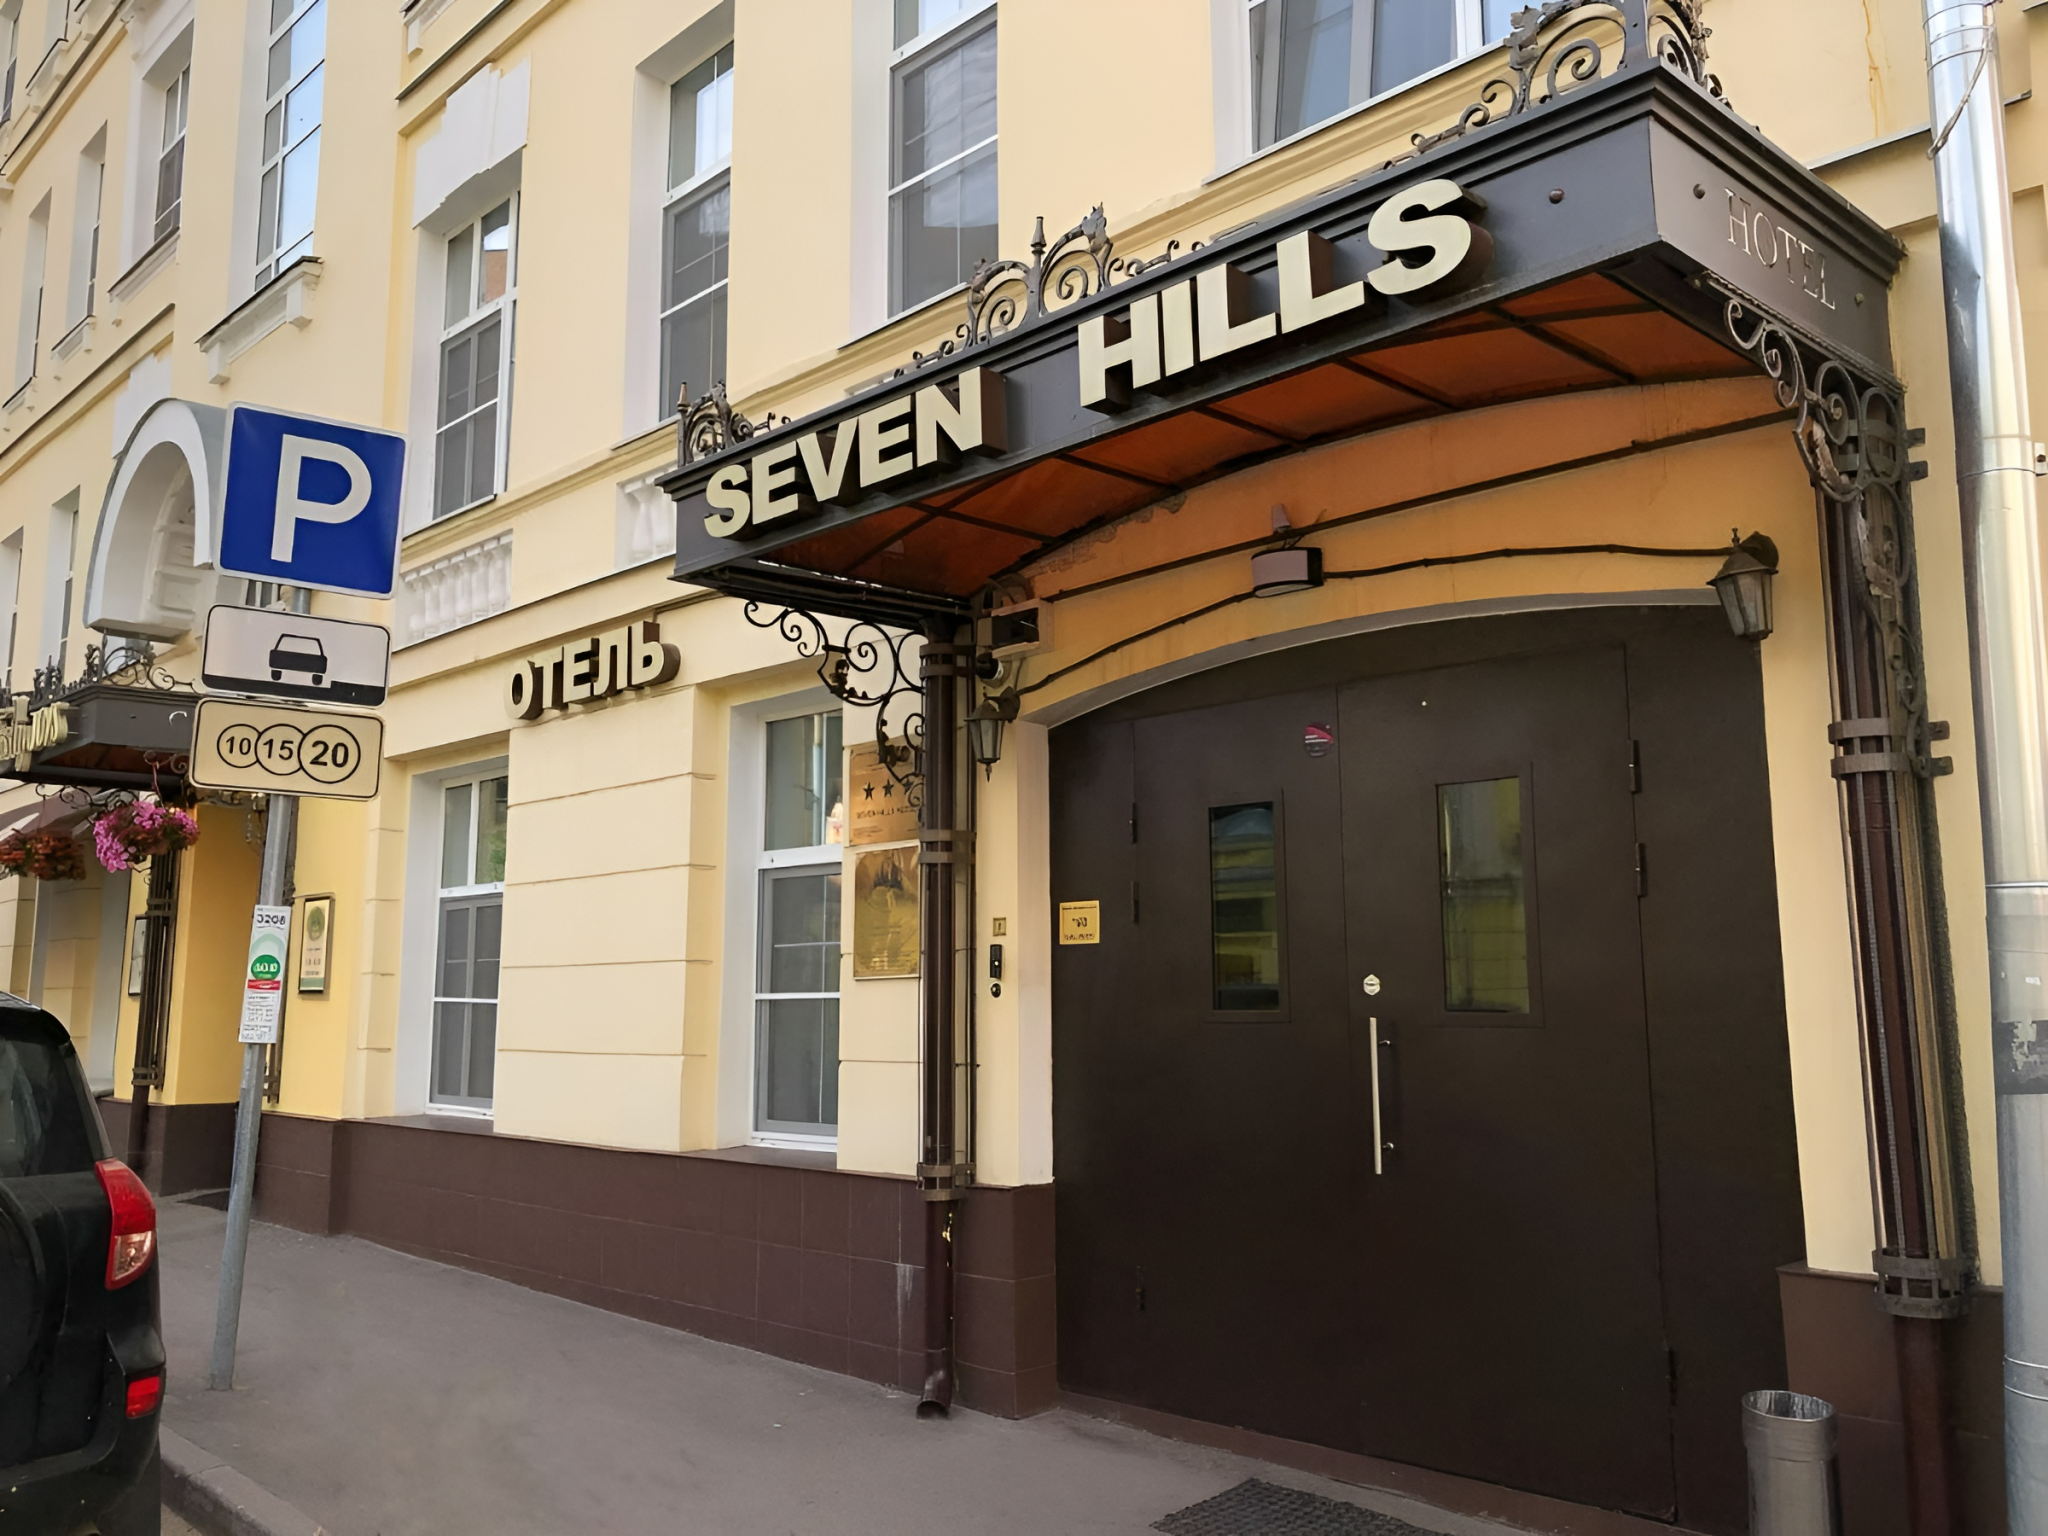 7 Hills отель Москва. Seven Hills Таганка. Мини-отель Seven Hills Taganka. Отель Севен Хиллс на Брестской. Севен хиллс таганка